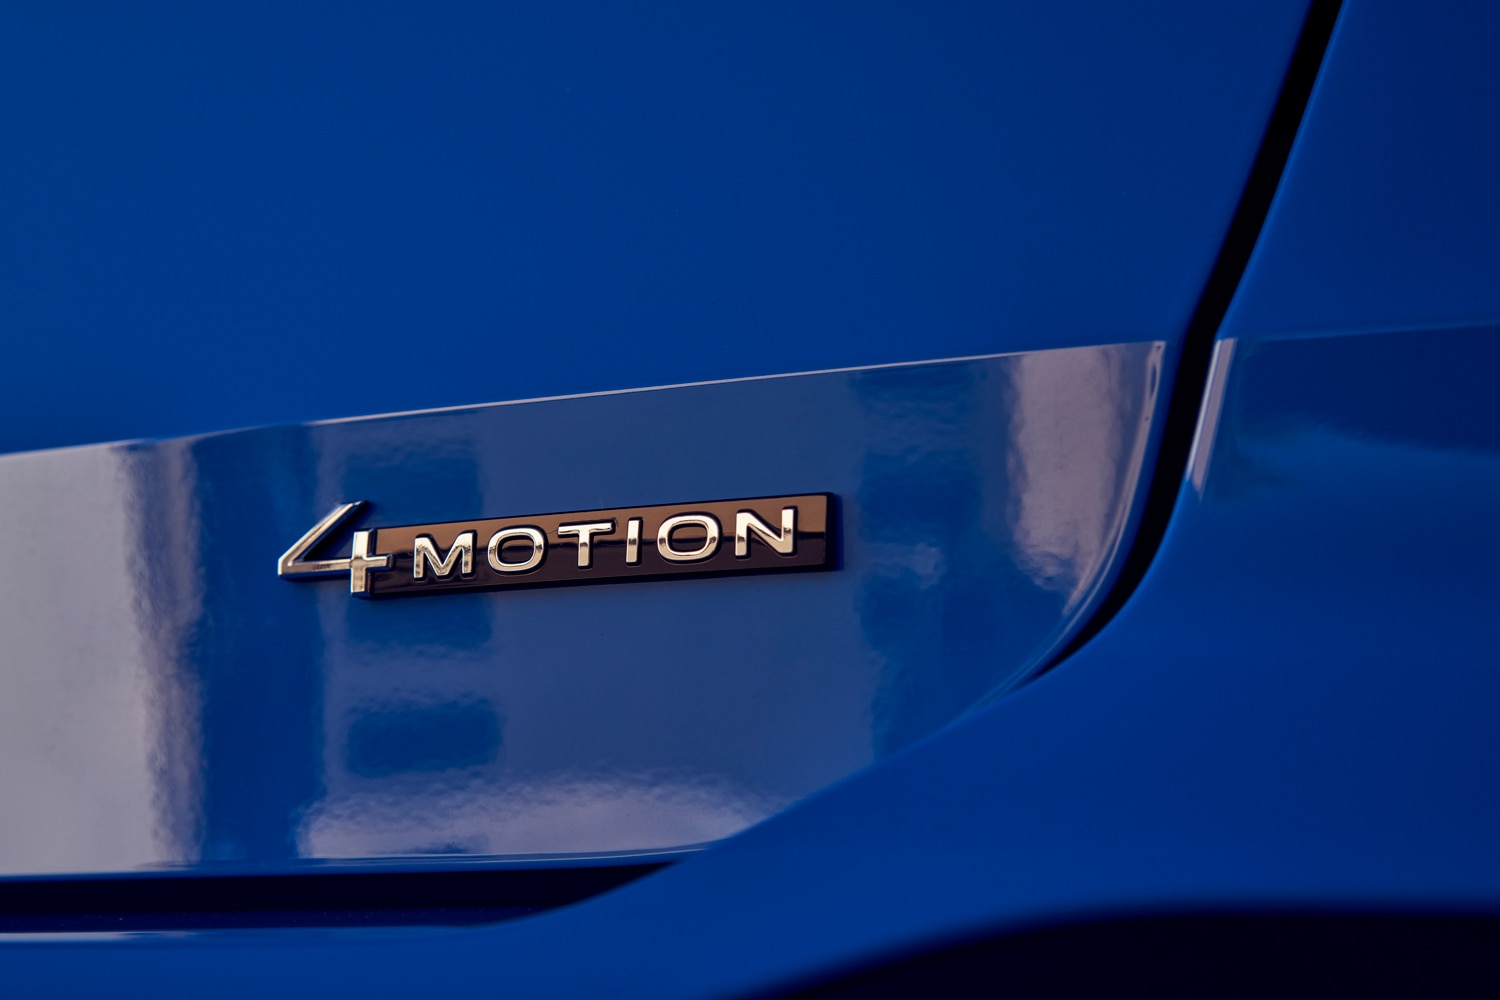 A 4Motion badge on a blue car